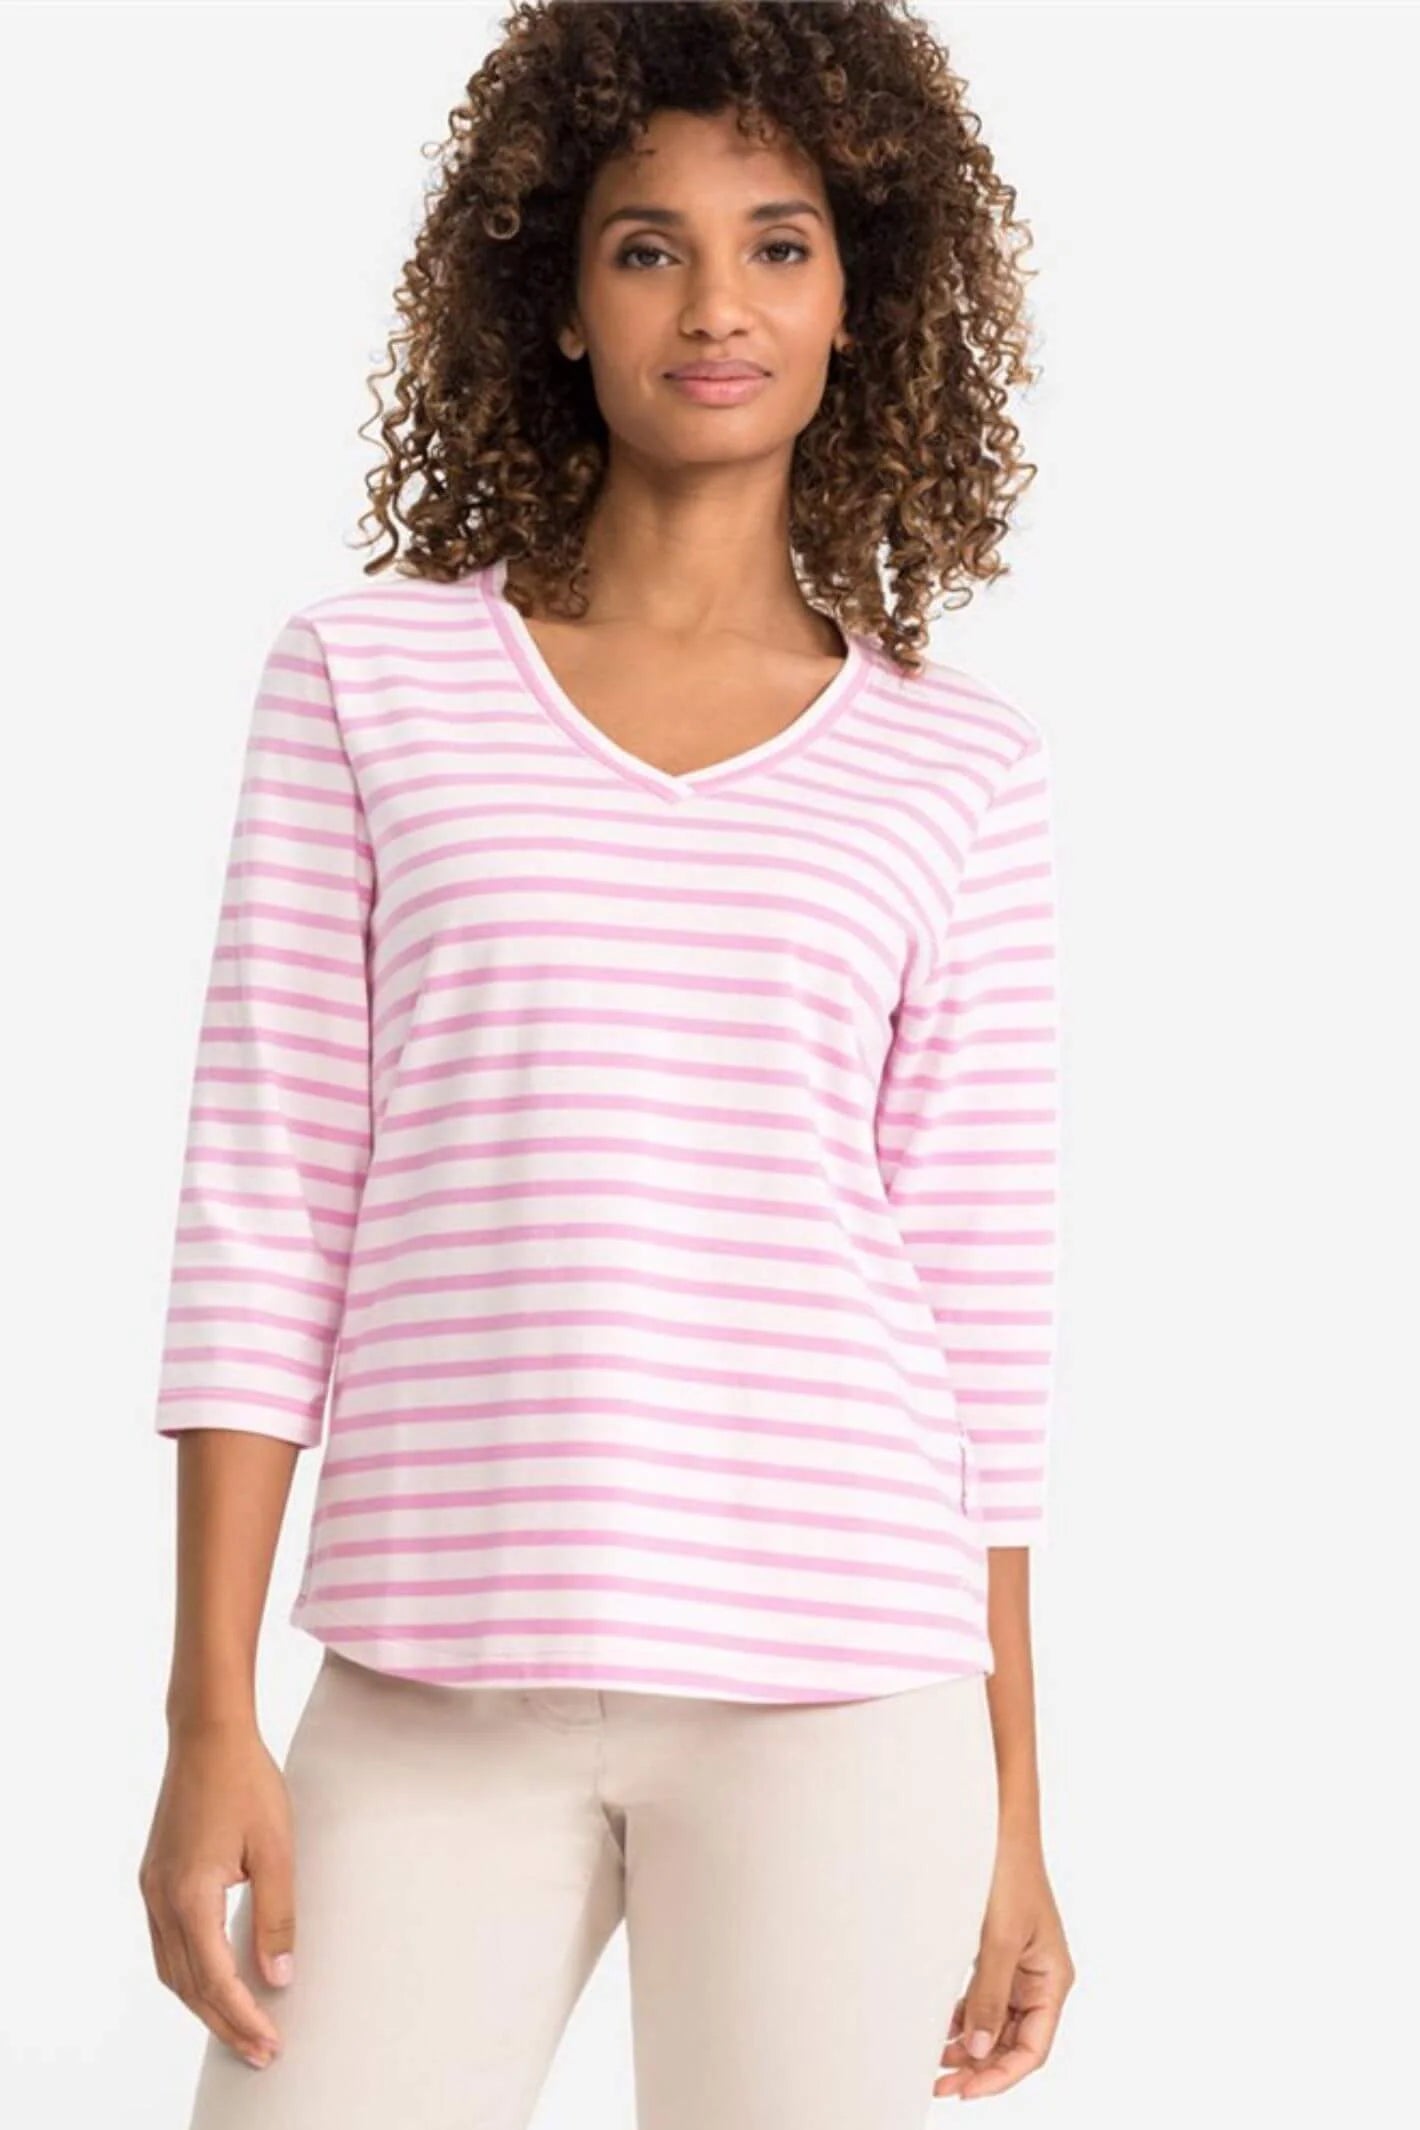 Olsen - Pink Stripe 3/4 Sleeve T-Shirt